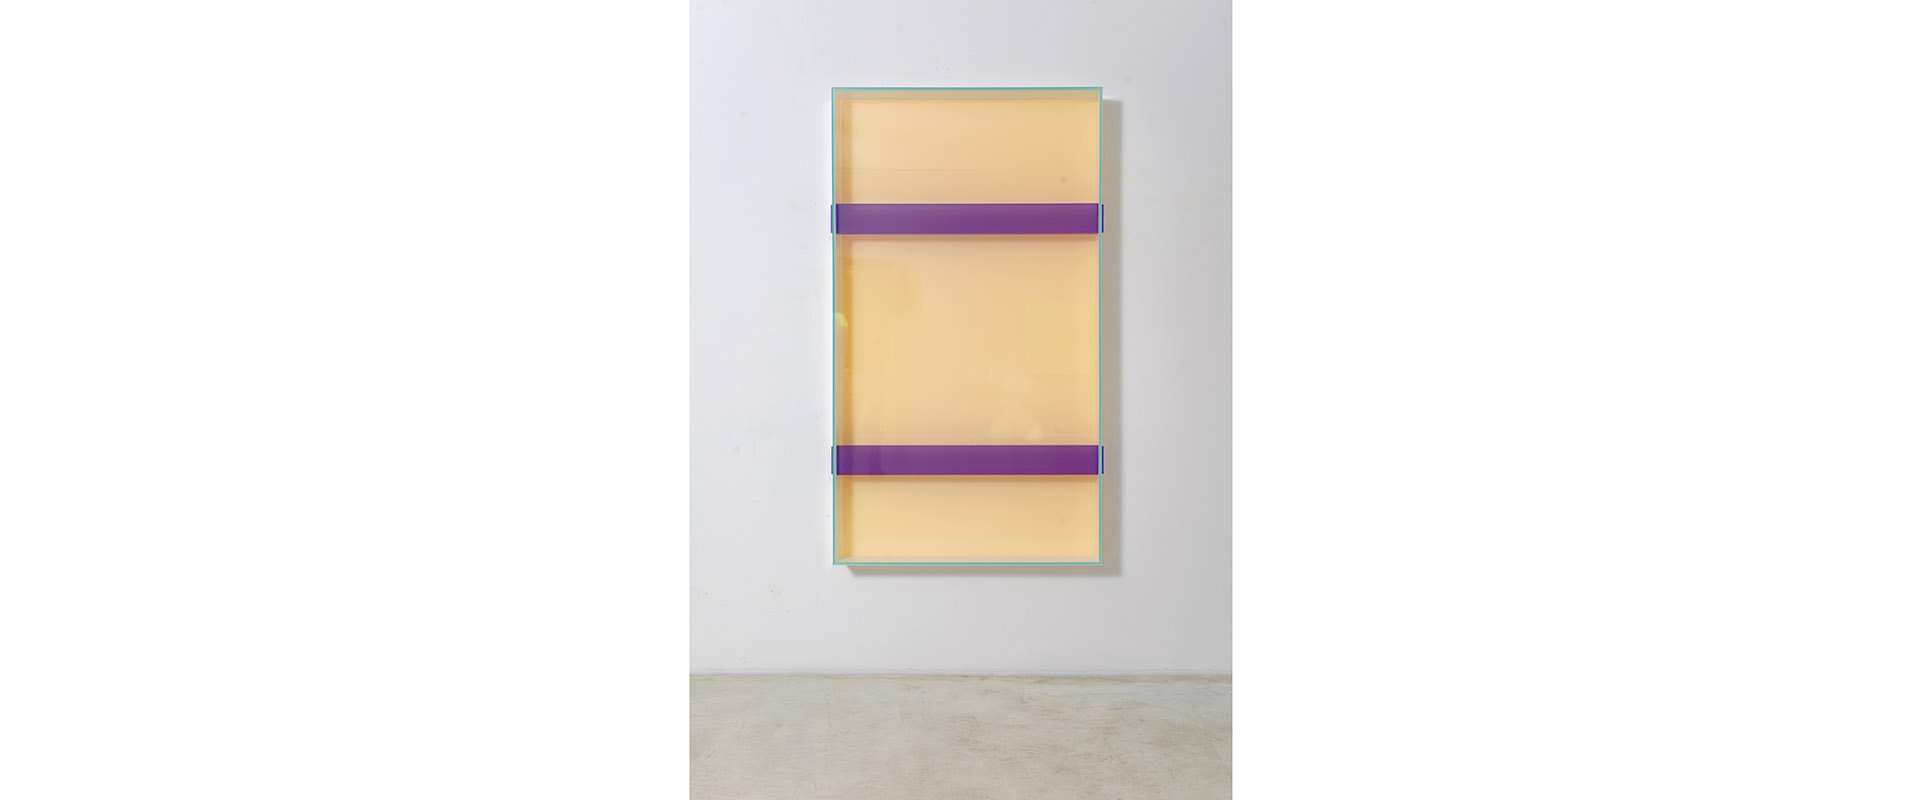 colormirror green double bars violet toronto - 2019, Acrylglas, fluoreszierend, 160 x 80 x 12 cm